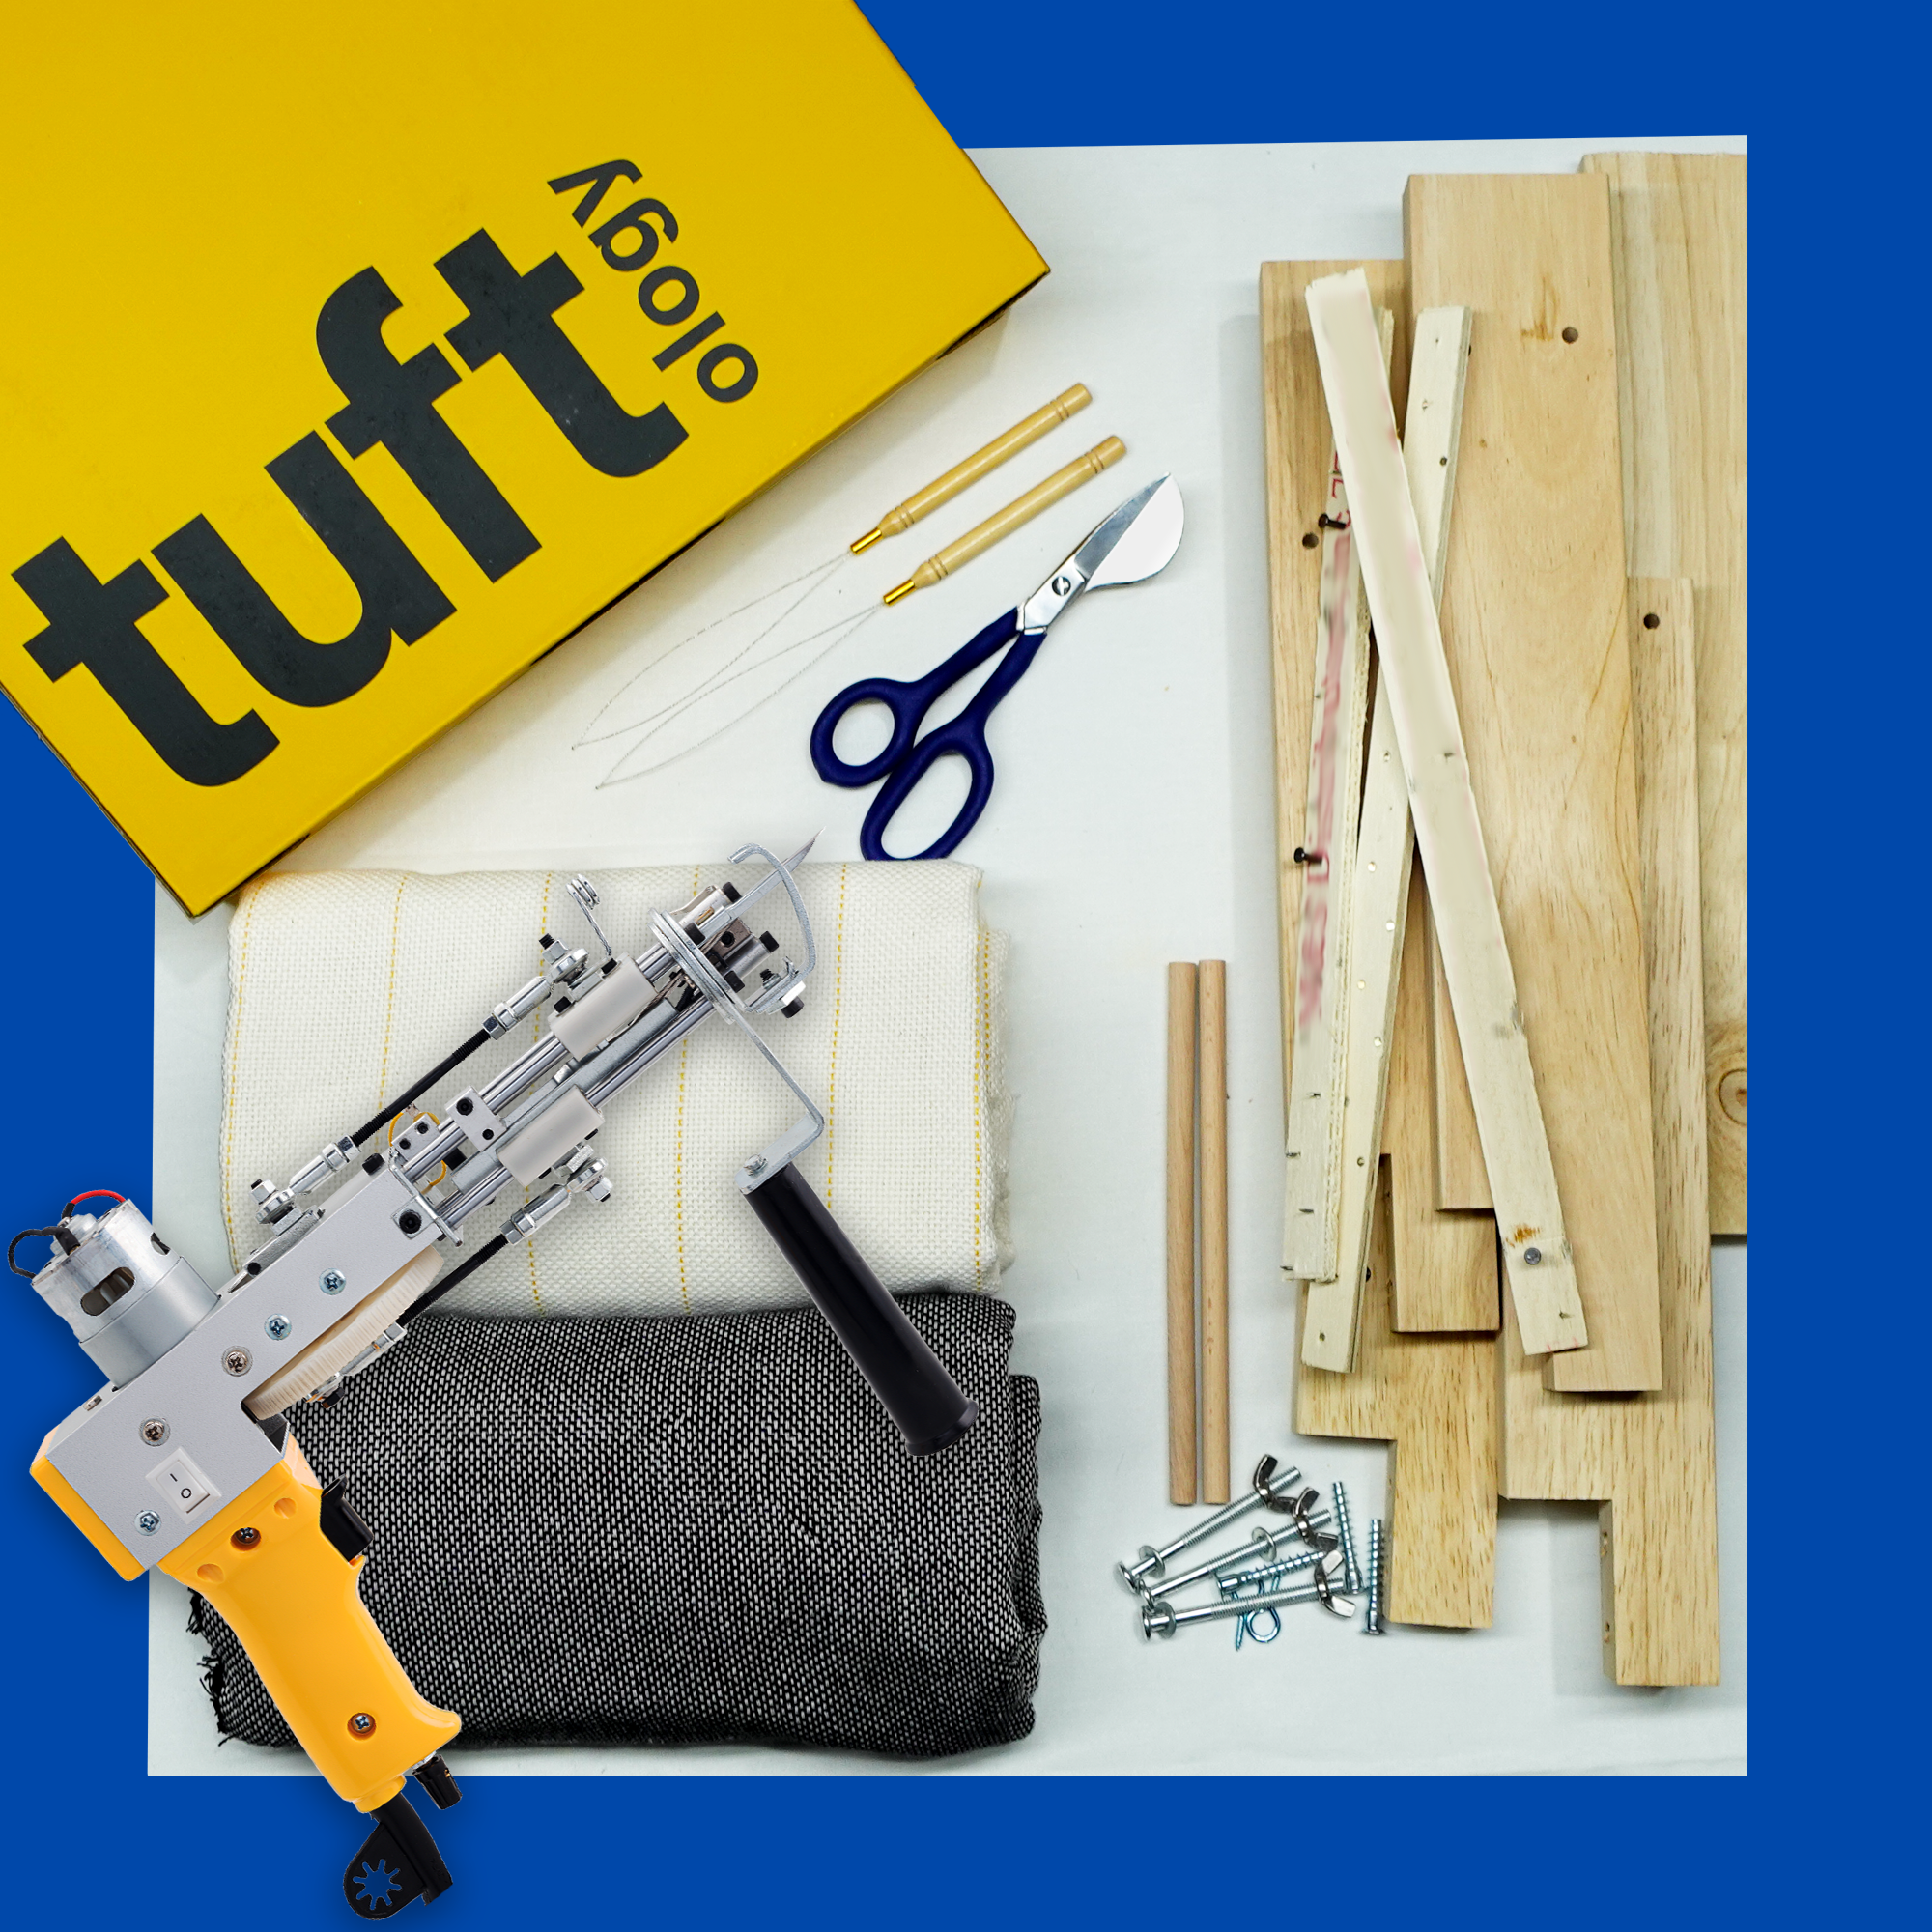 Tufting Gun, Rug Tufting Tools, Rug Making Supplies